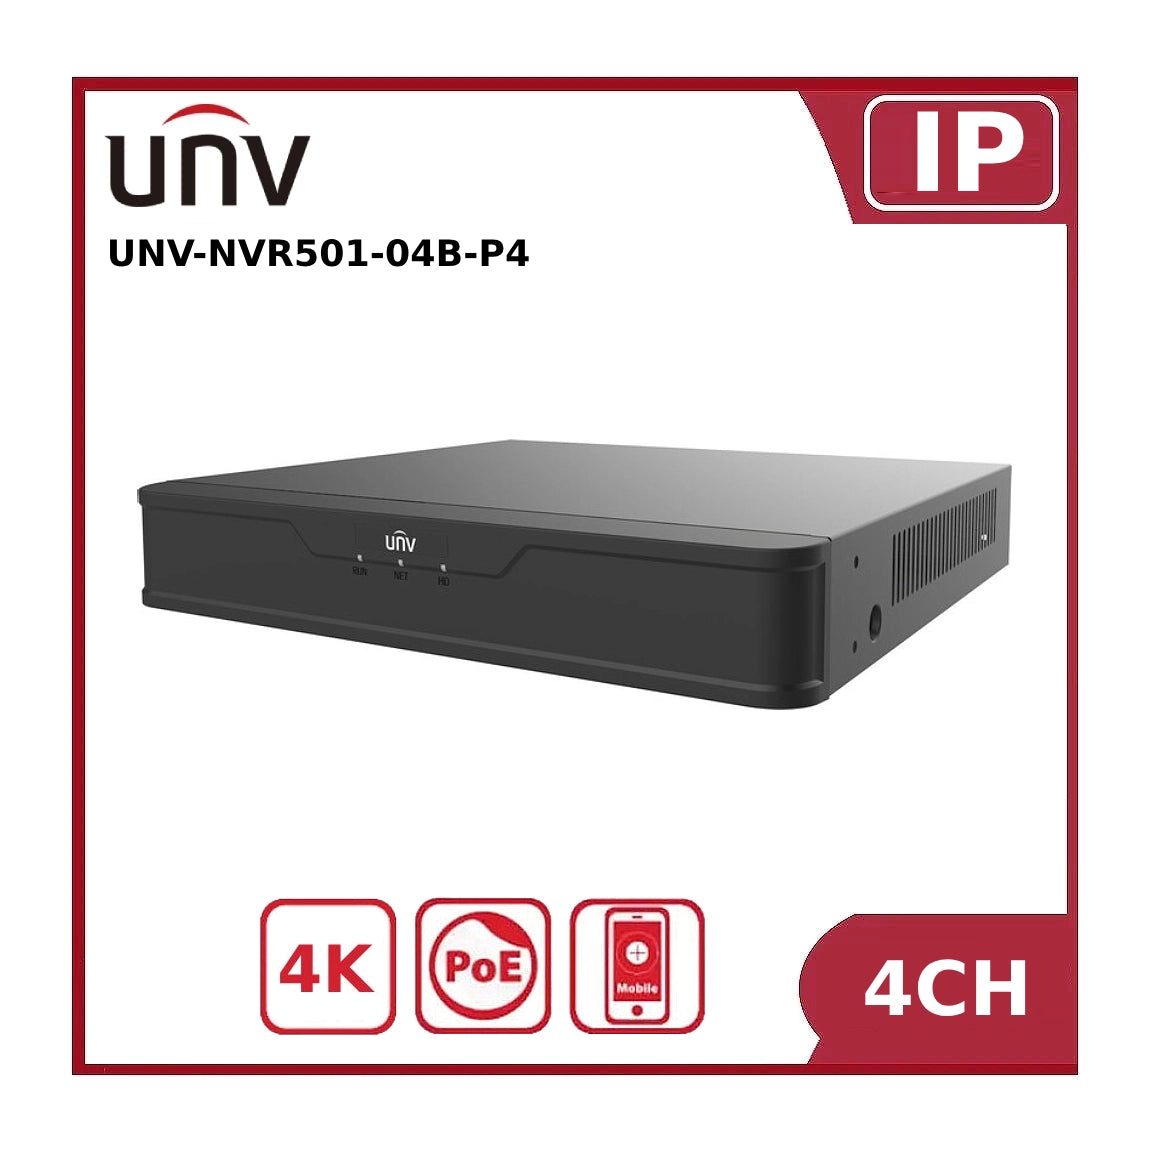 UNV-NVR501-04B-P4